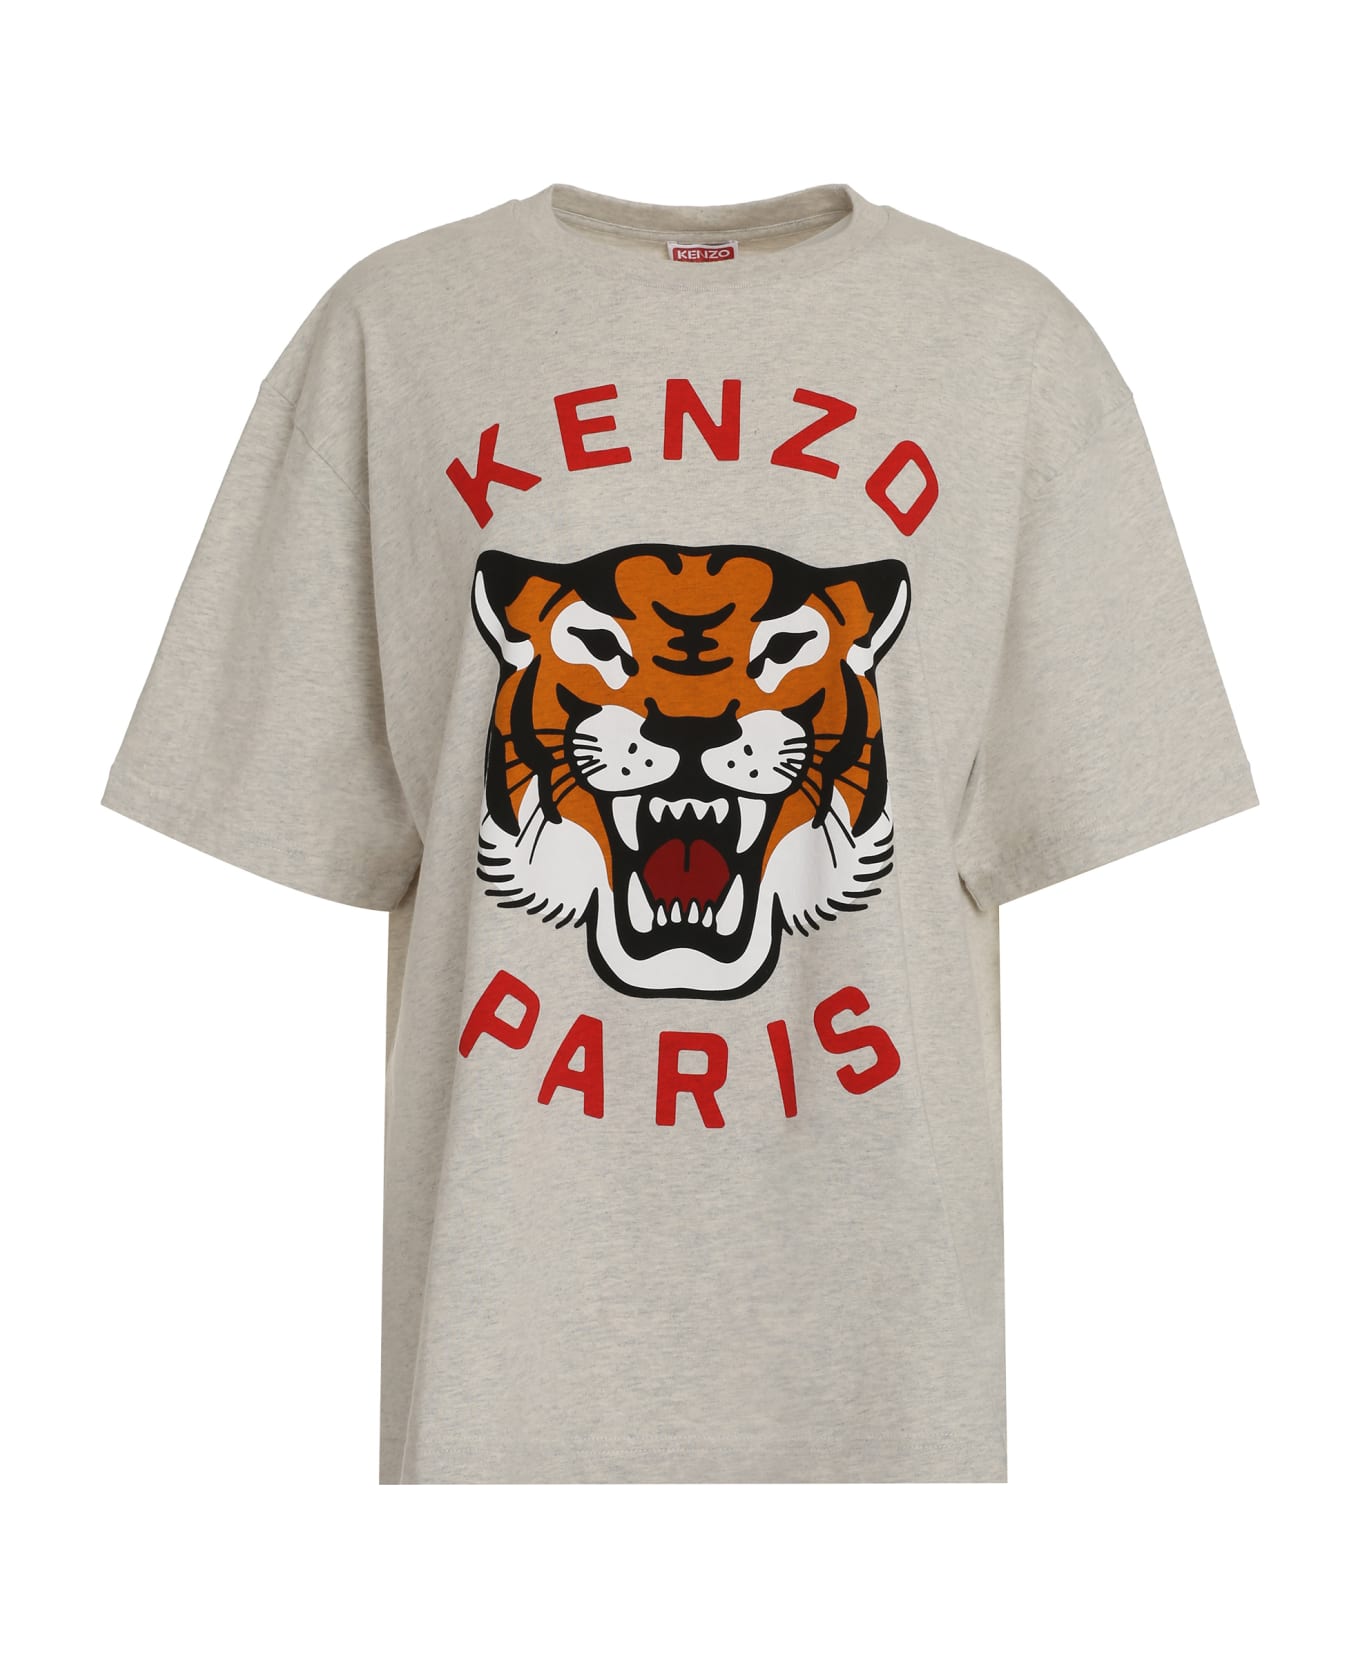 Kenzo Cotton Crew-neck T-shirt - Pale Grey